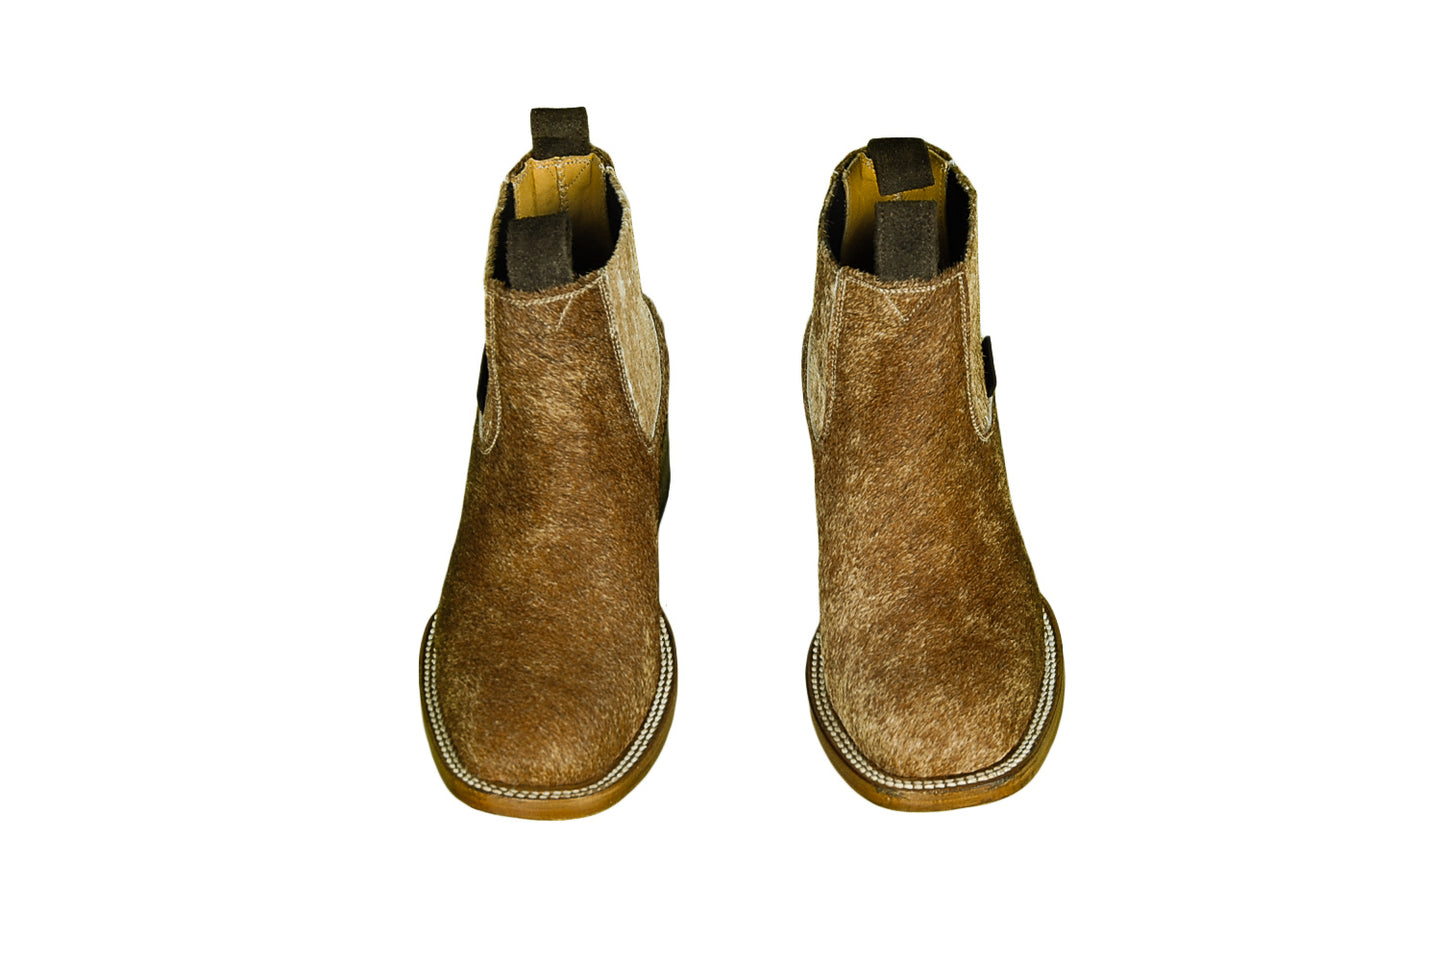 The Aurora Boots - talla 4.5 US